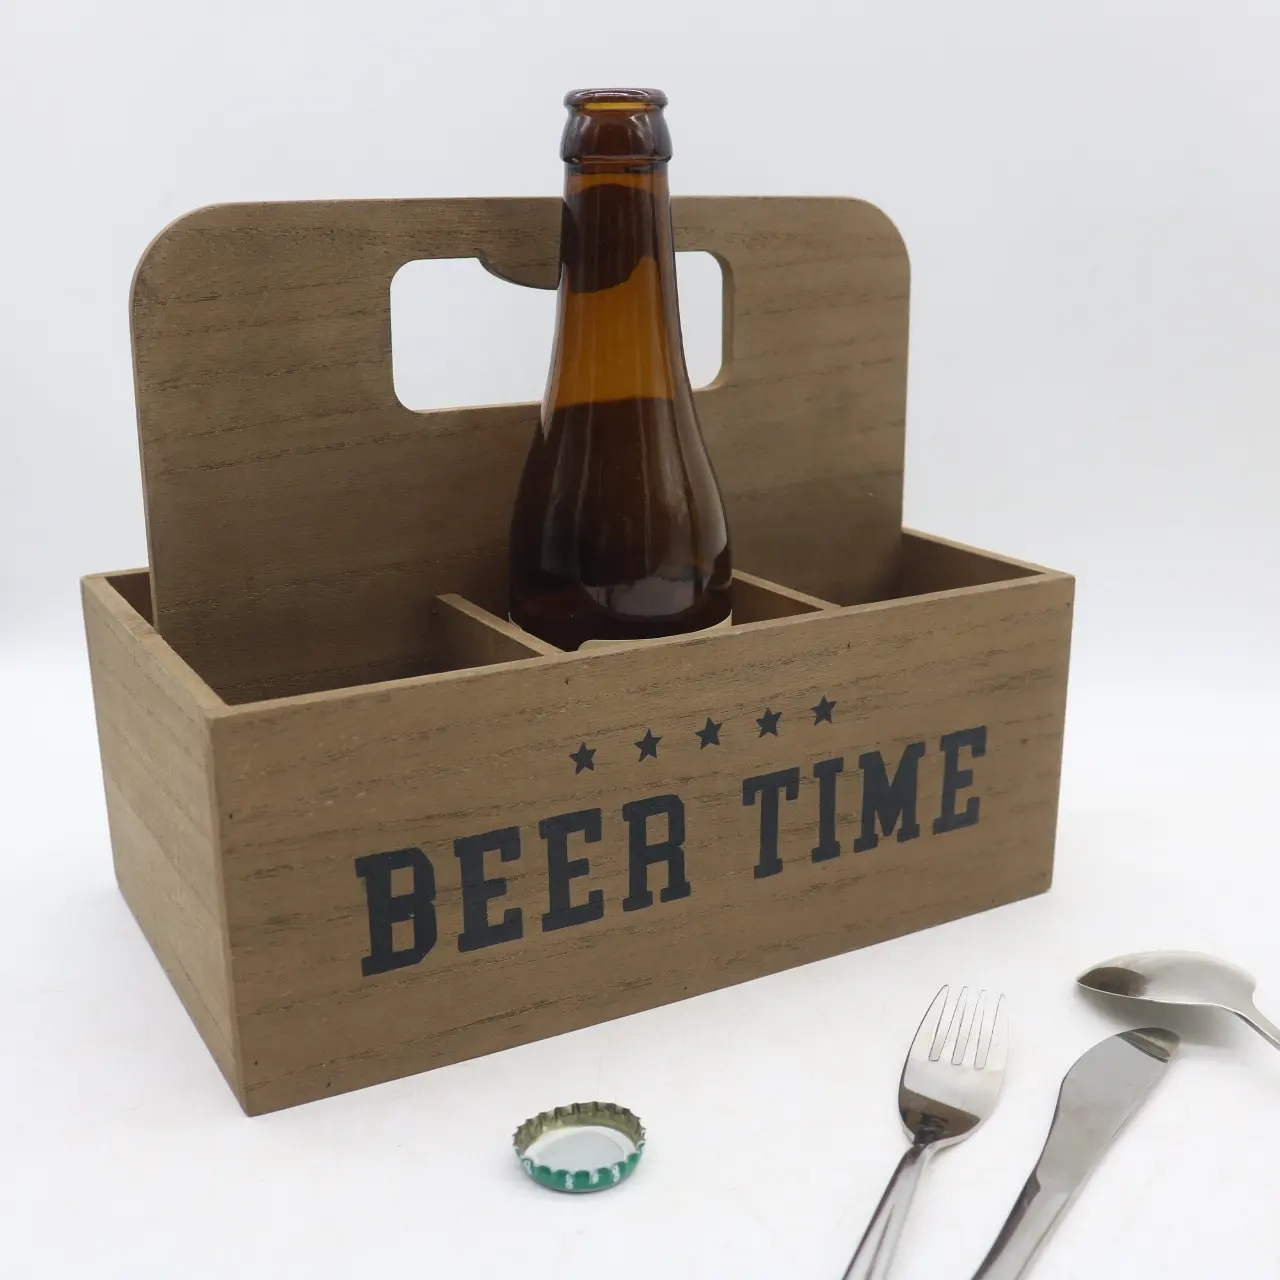 25x15x21cm Wood Wine Bottle Storage Box Wooden Beer Caddy Drinks Display Rack Holder For Beer